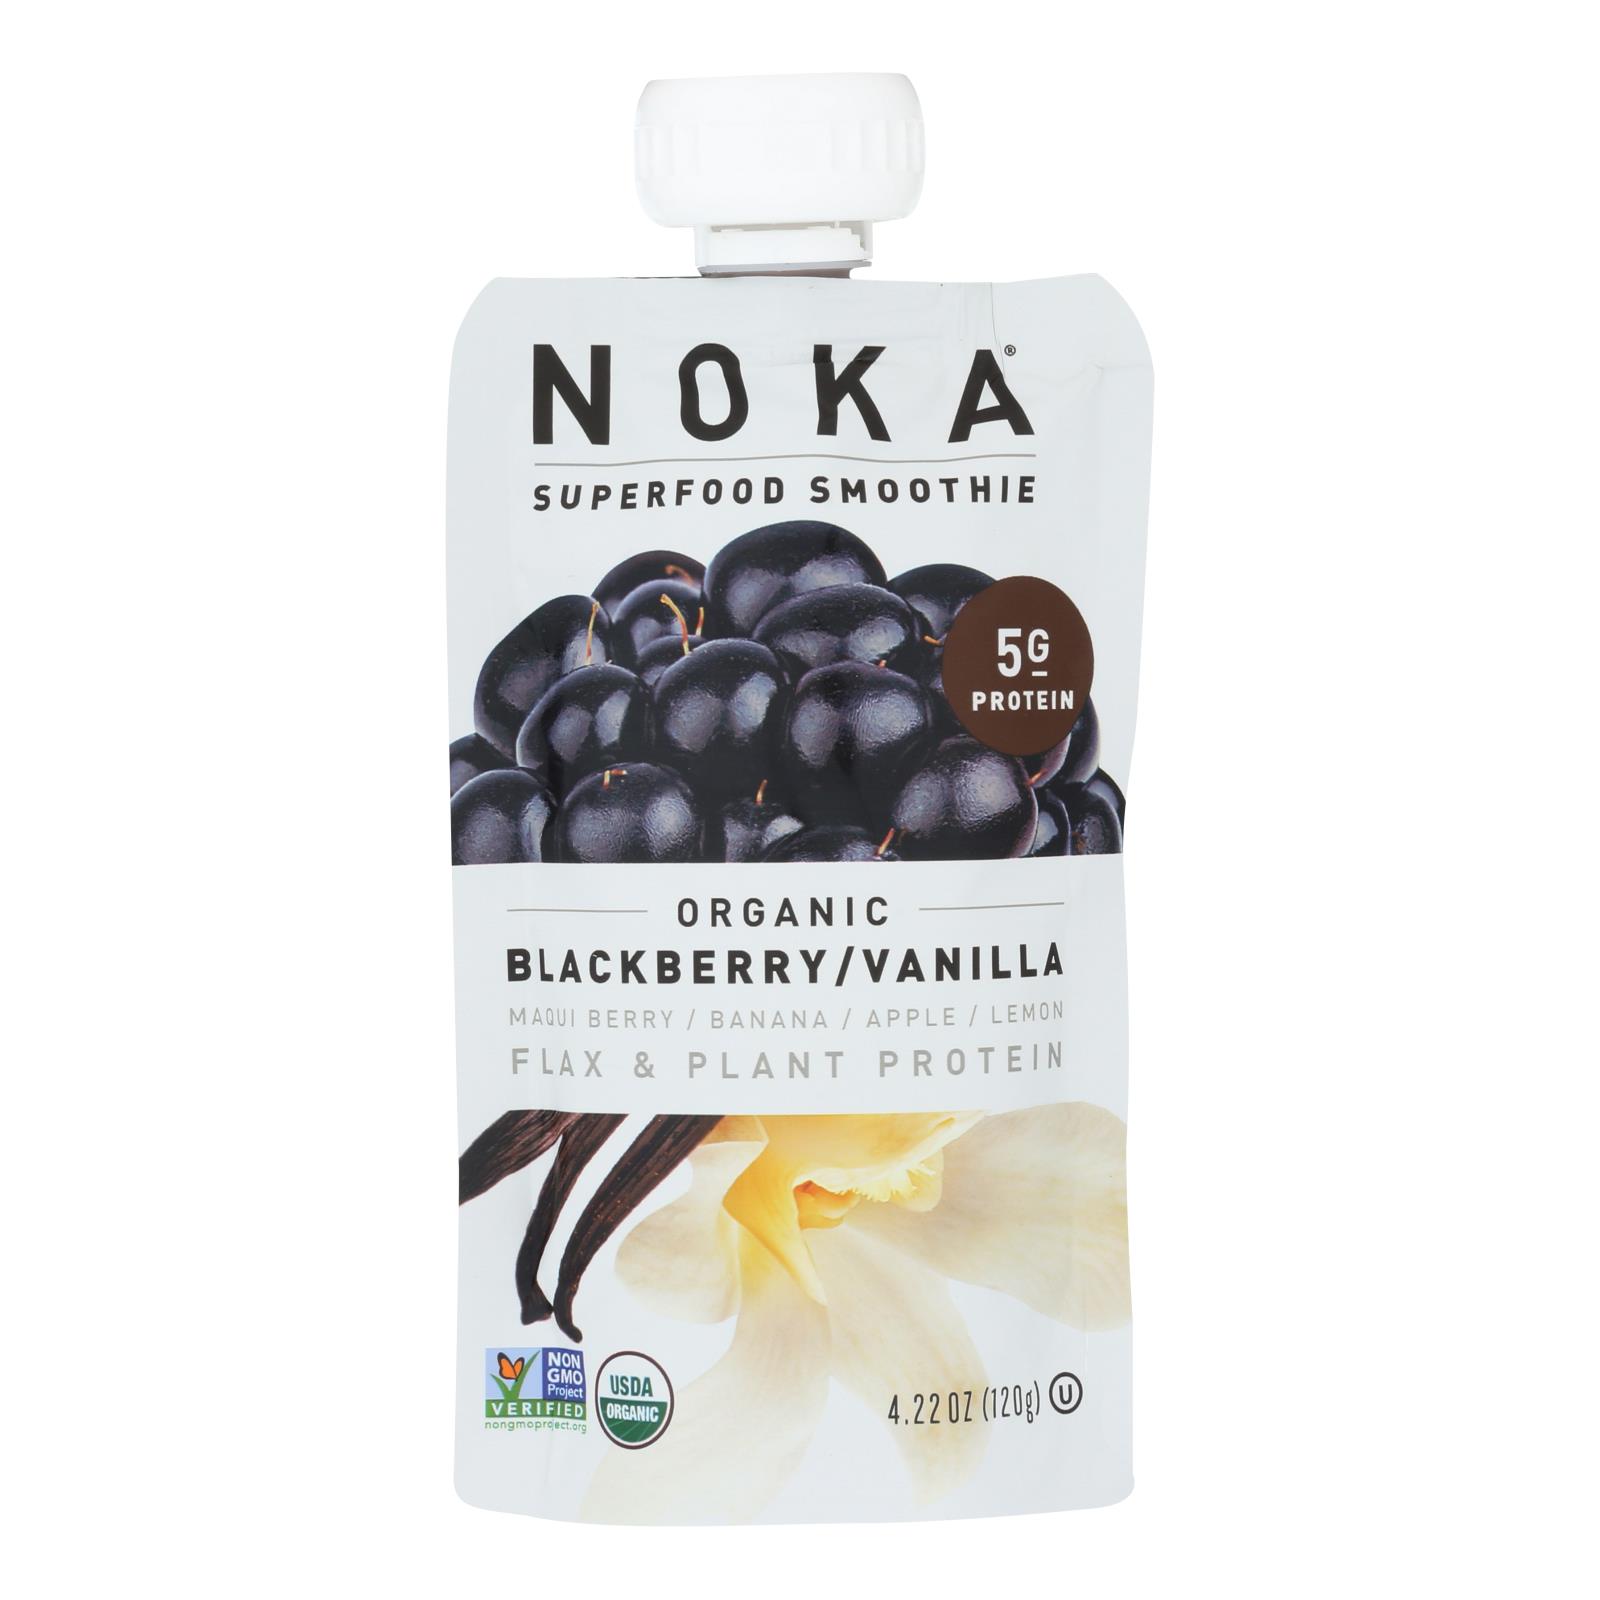 Noka Organic Blackberry/Vanilla Superfood Smoothie, Blackberry/Vanilla - 6개 묶음상품 - 4.22 OZ